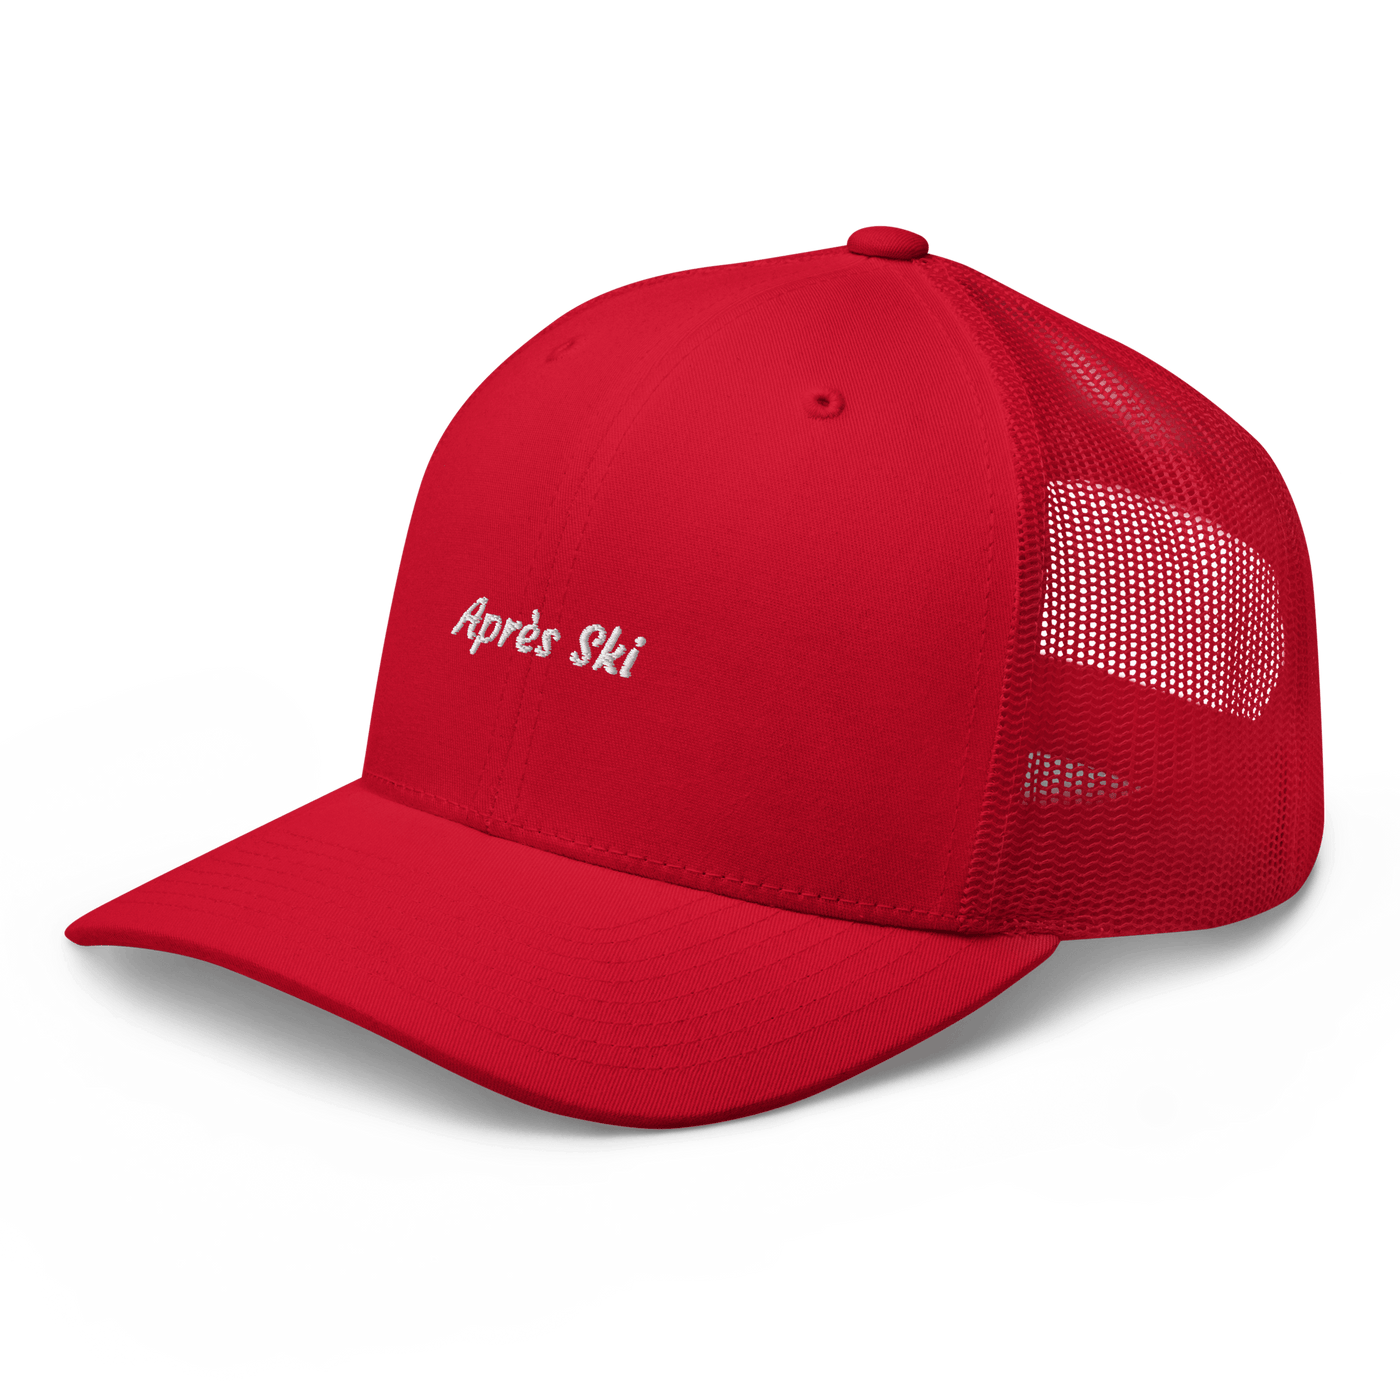 Après Ski Trucker Cap - Red - - Just Another Cap Store